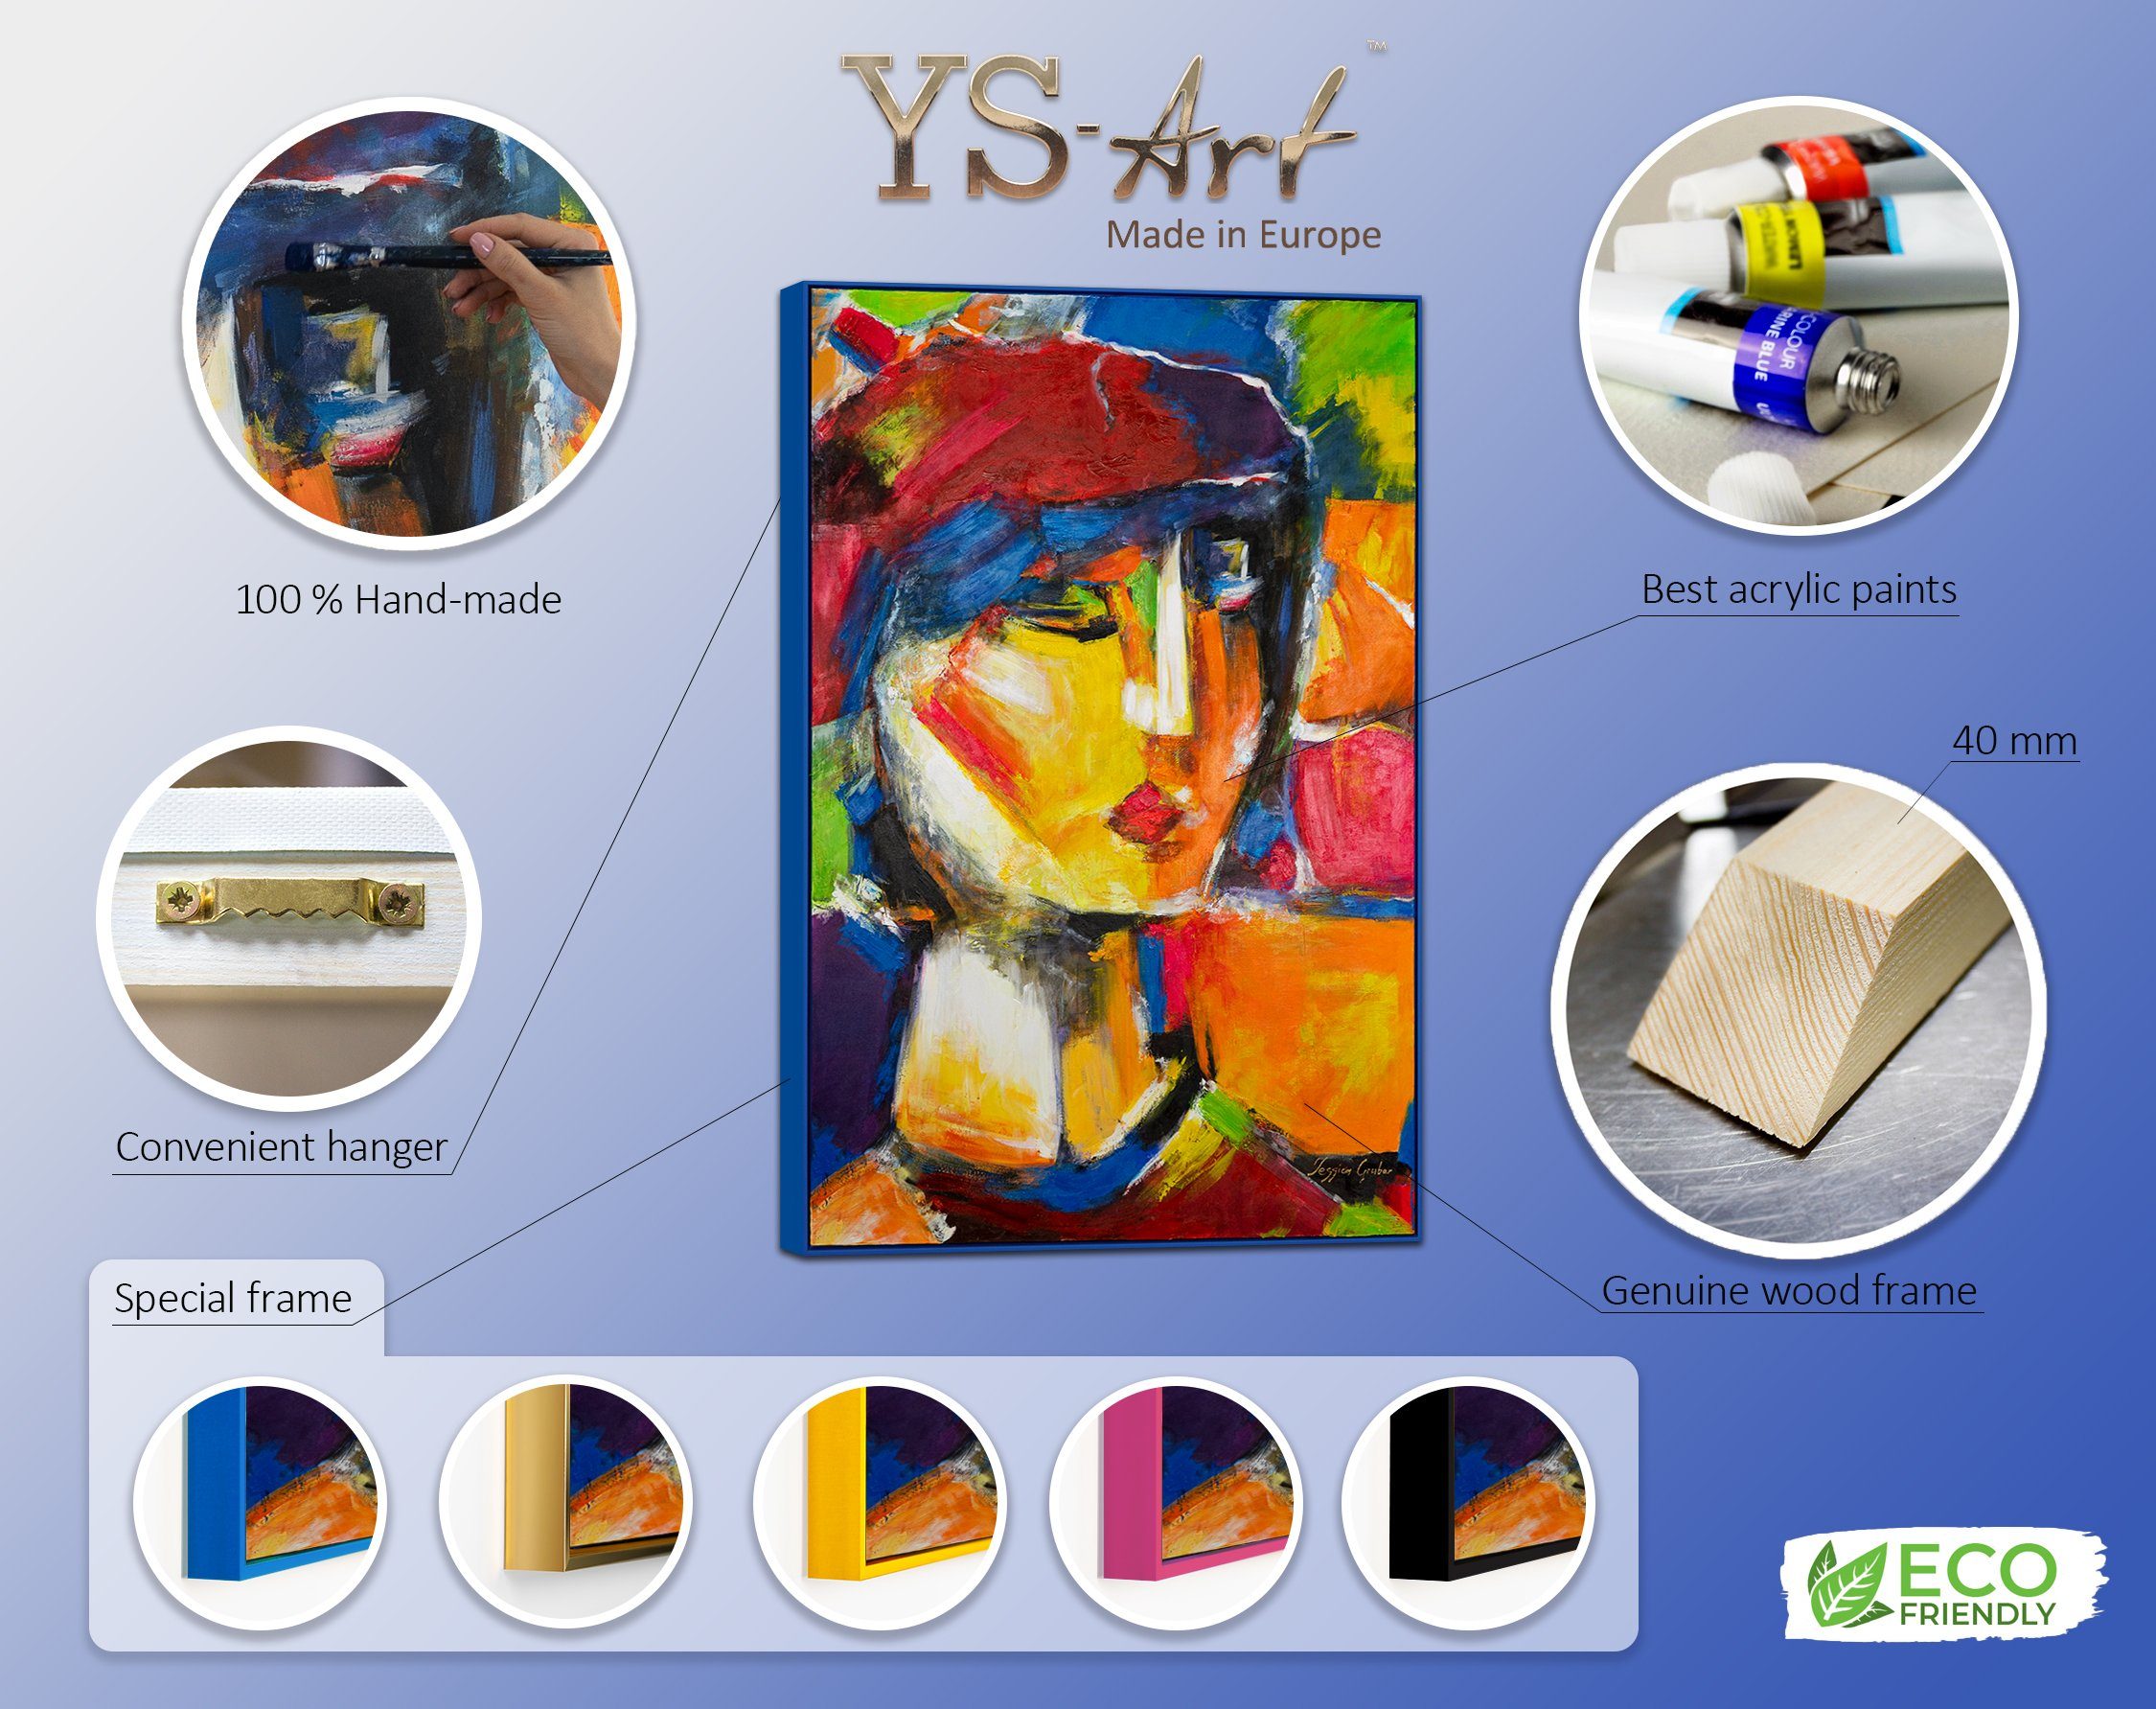 Lebhaftes Rahmen Abstraktion in Gemälde YS-Art Outfit, Mit Gelb